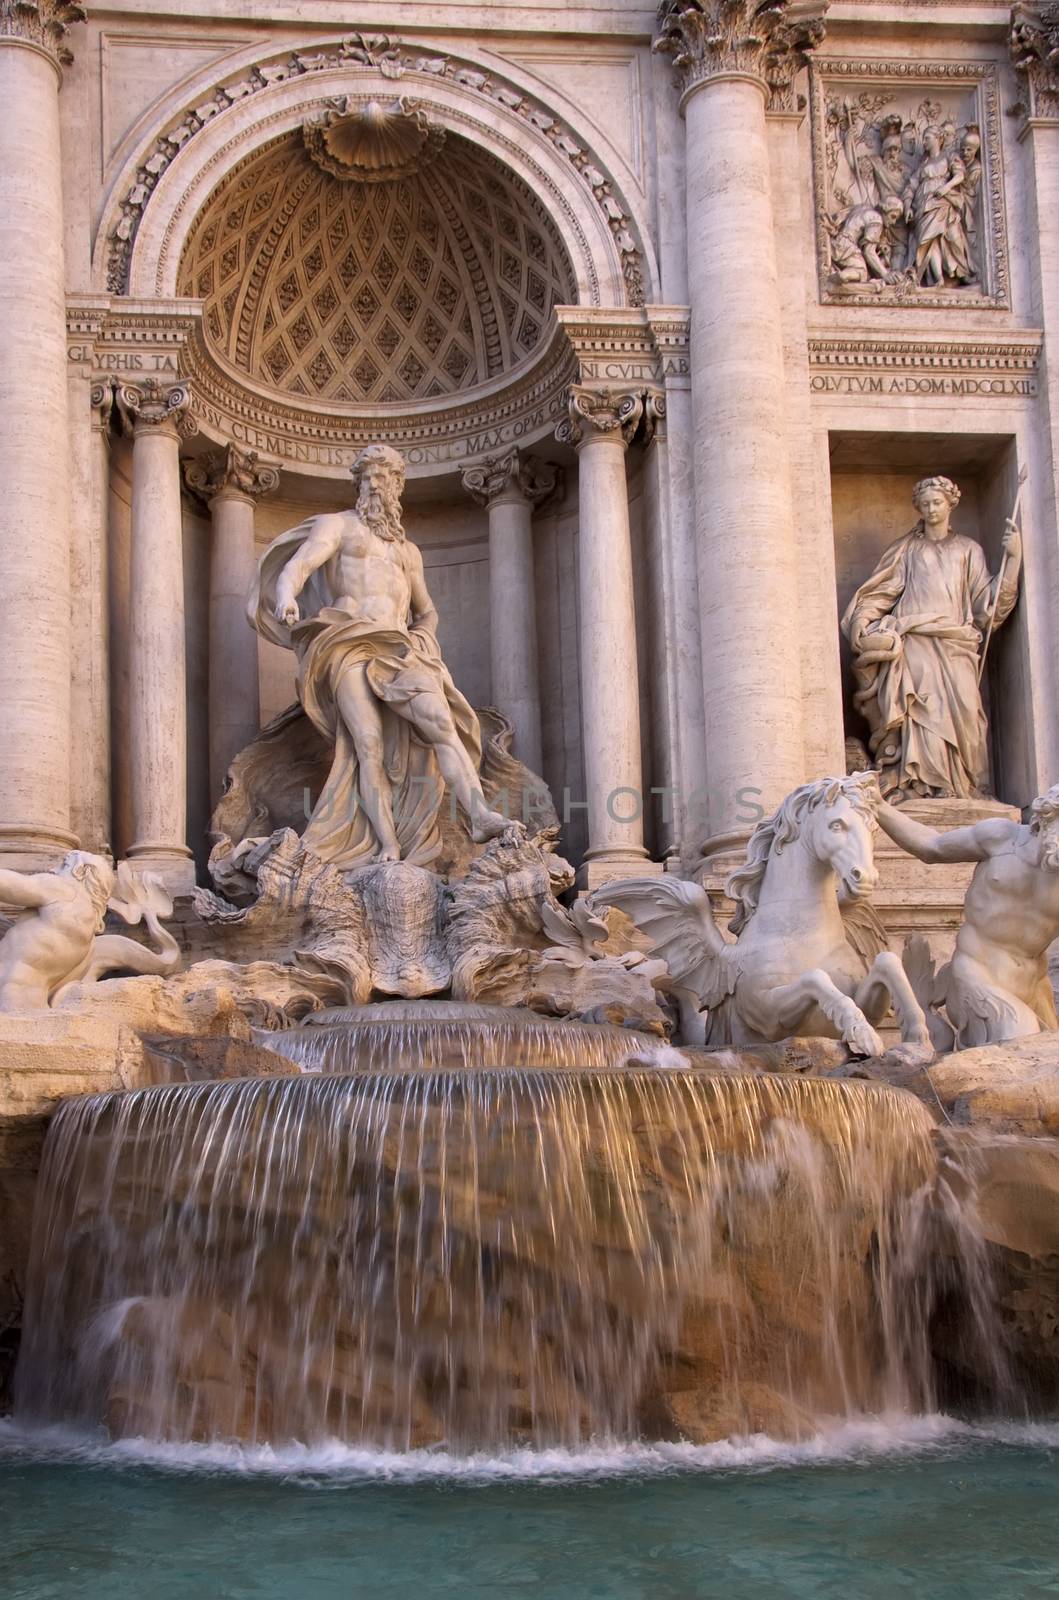 The Trevi Fountain in Rome by fotoecho